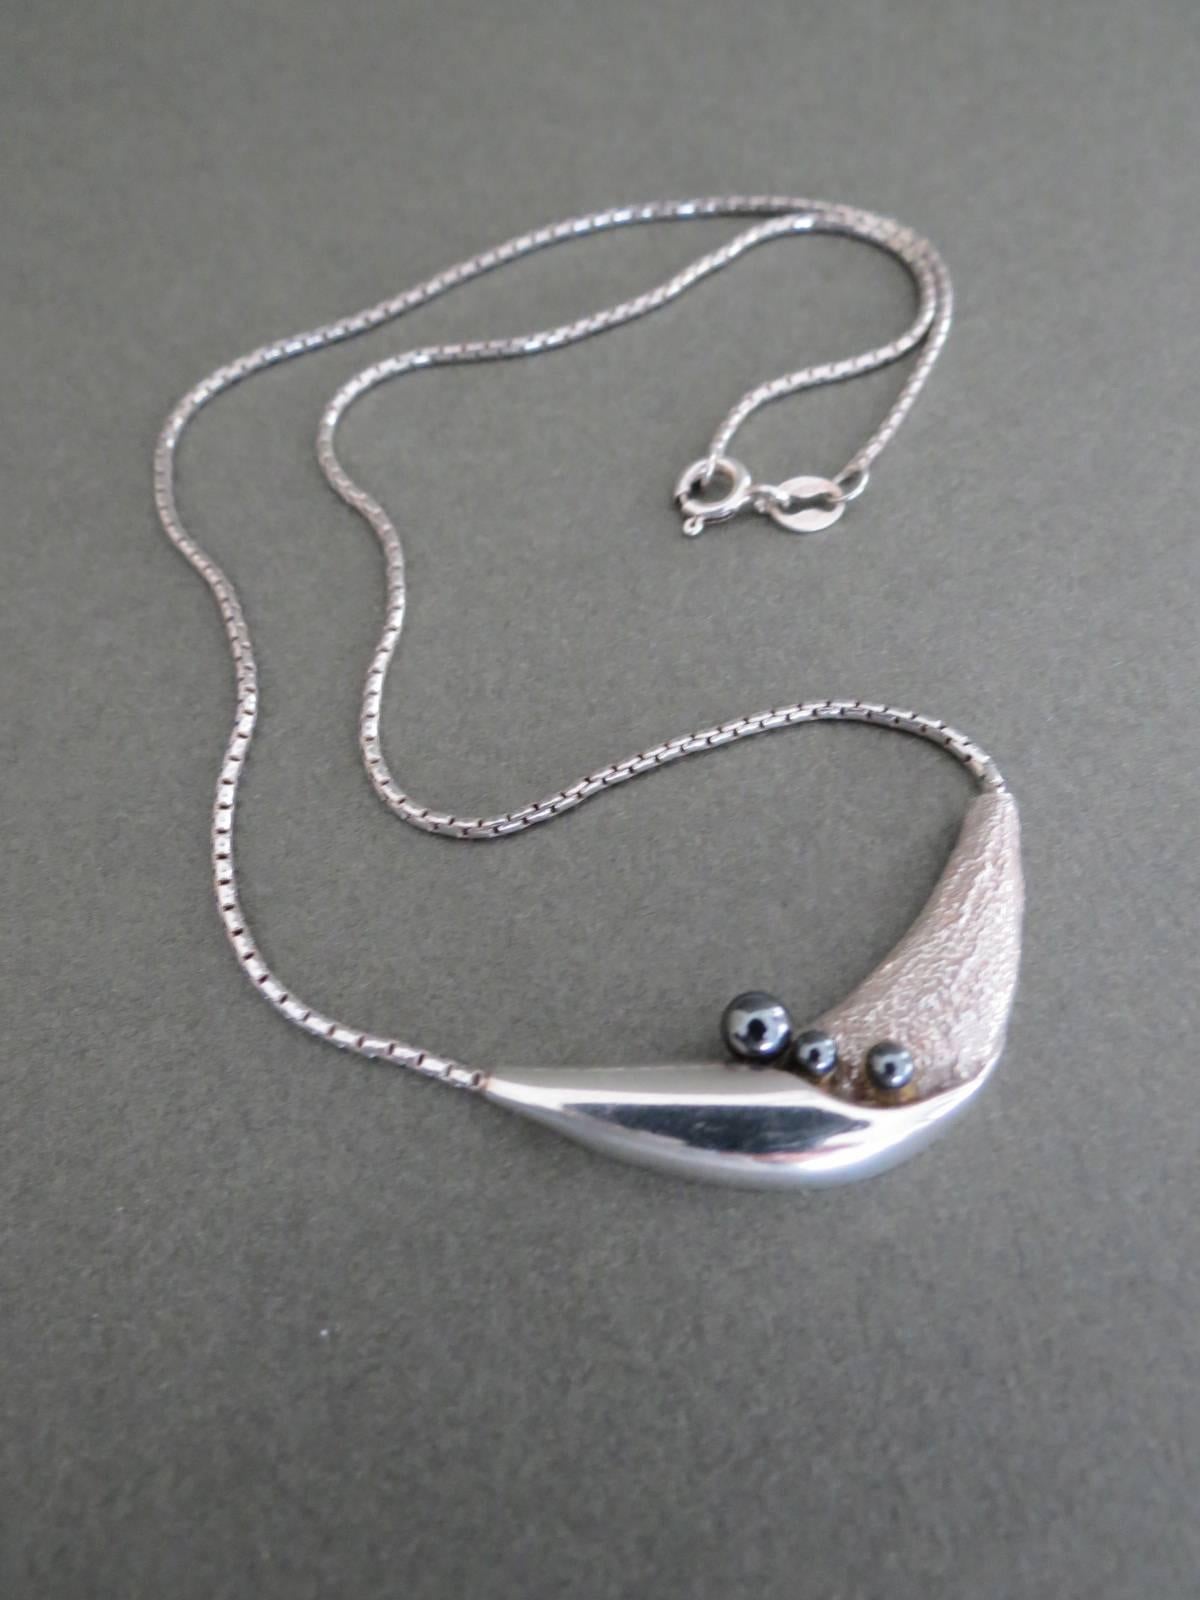 Vintage Danish Mid Century Modernist Silver Necklace. Hallmarked .
Item Specifics
Length: 43cm (approx 17.00